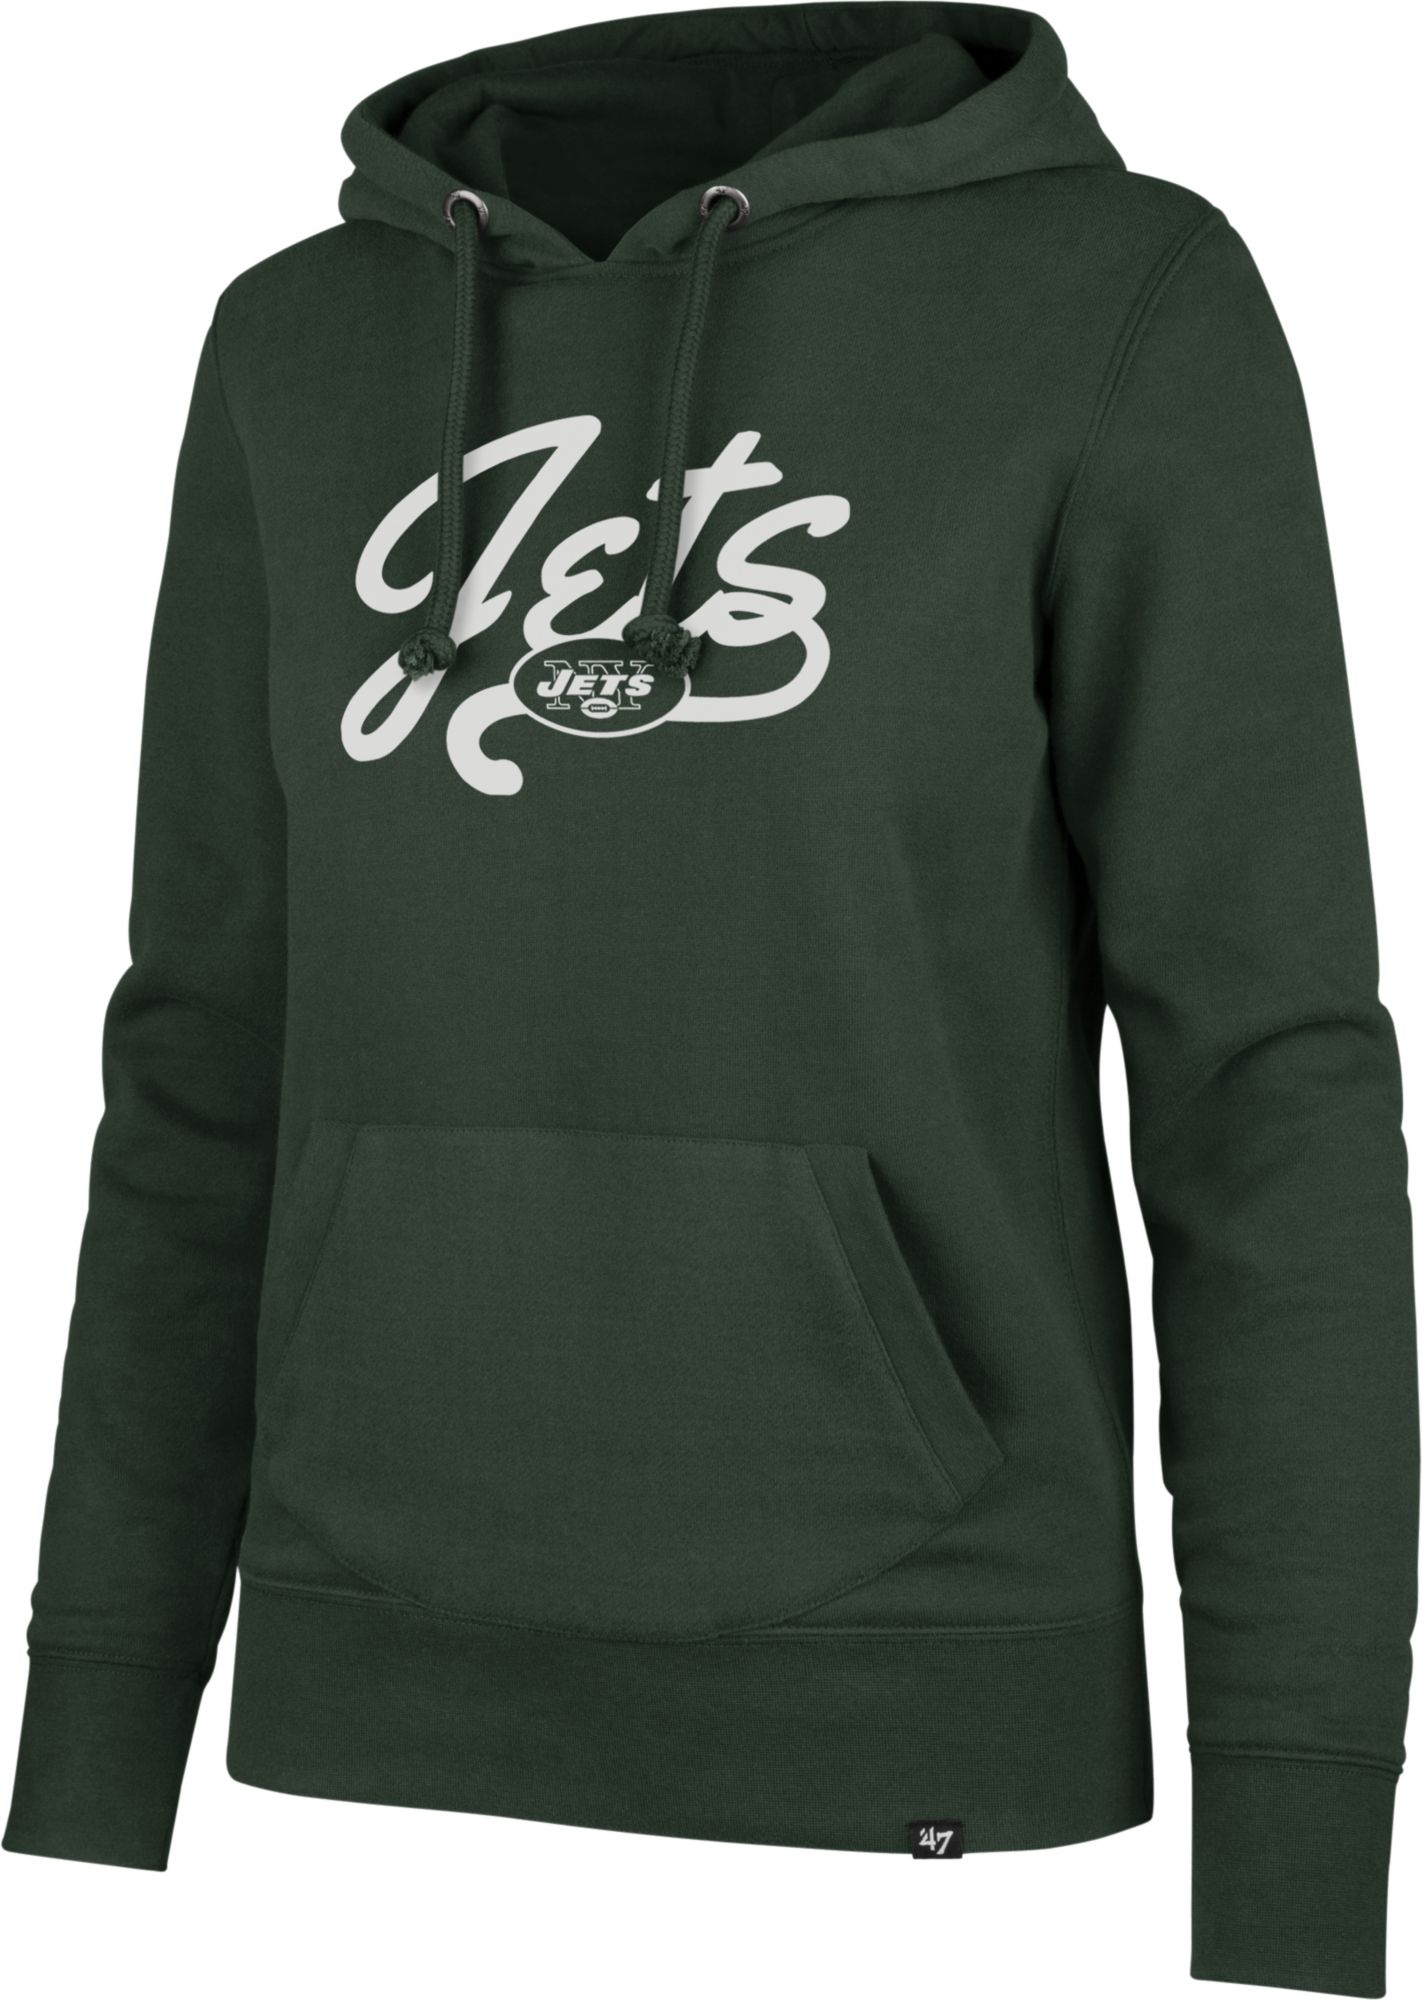 ny jets womens hoodie